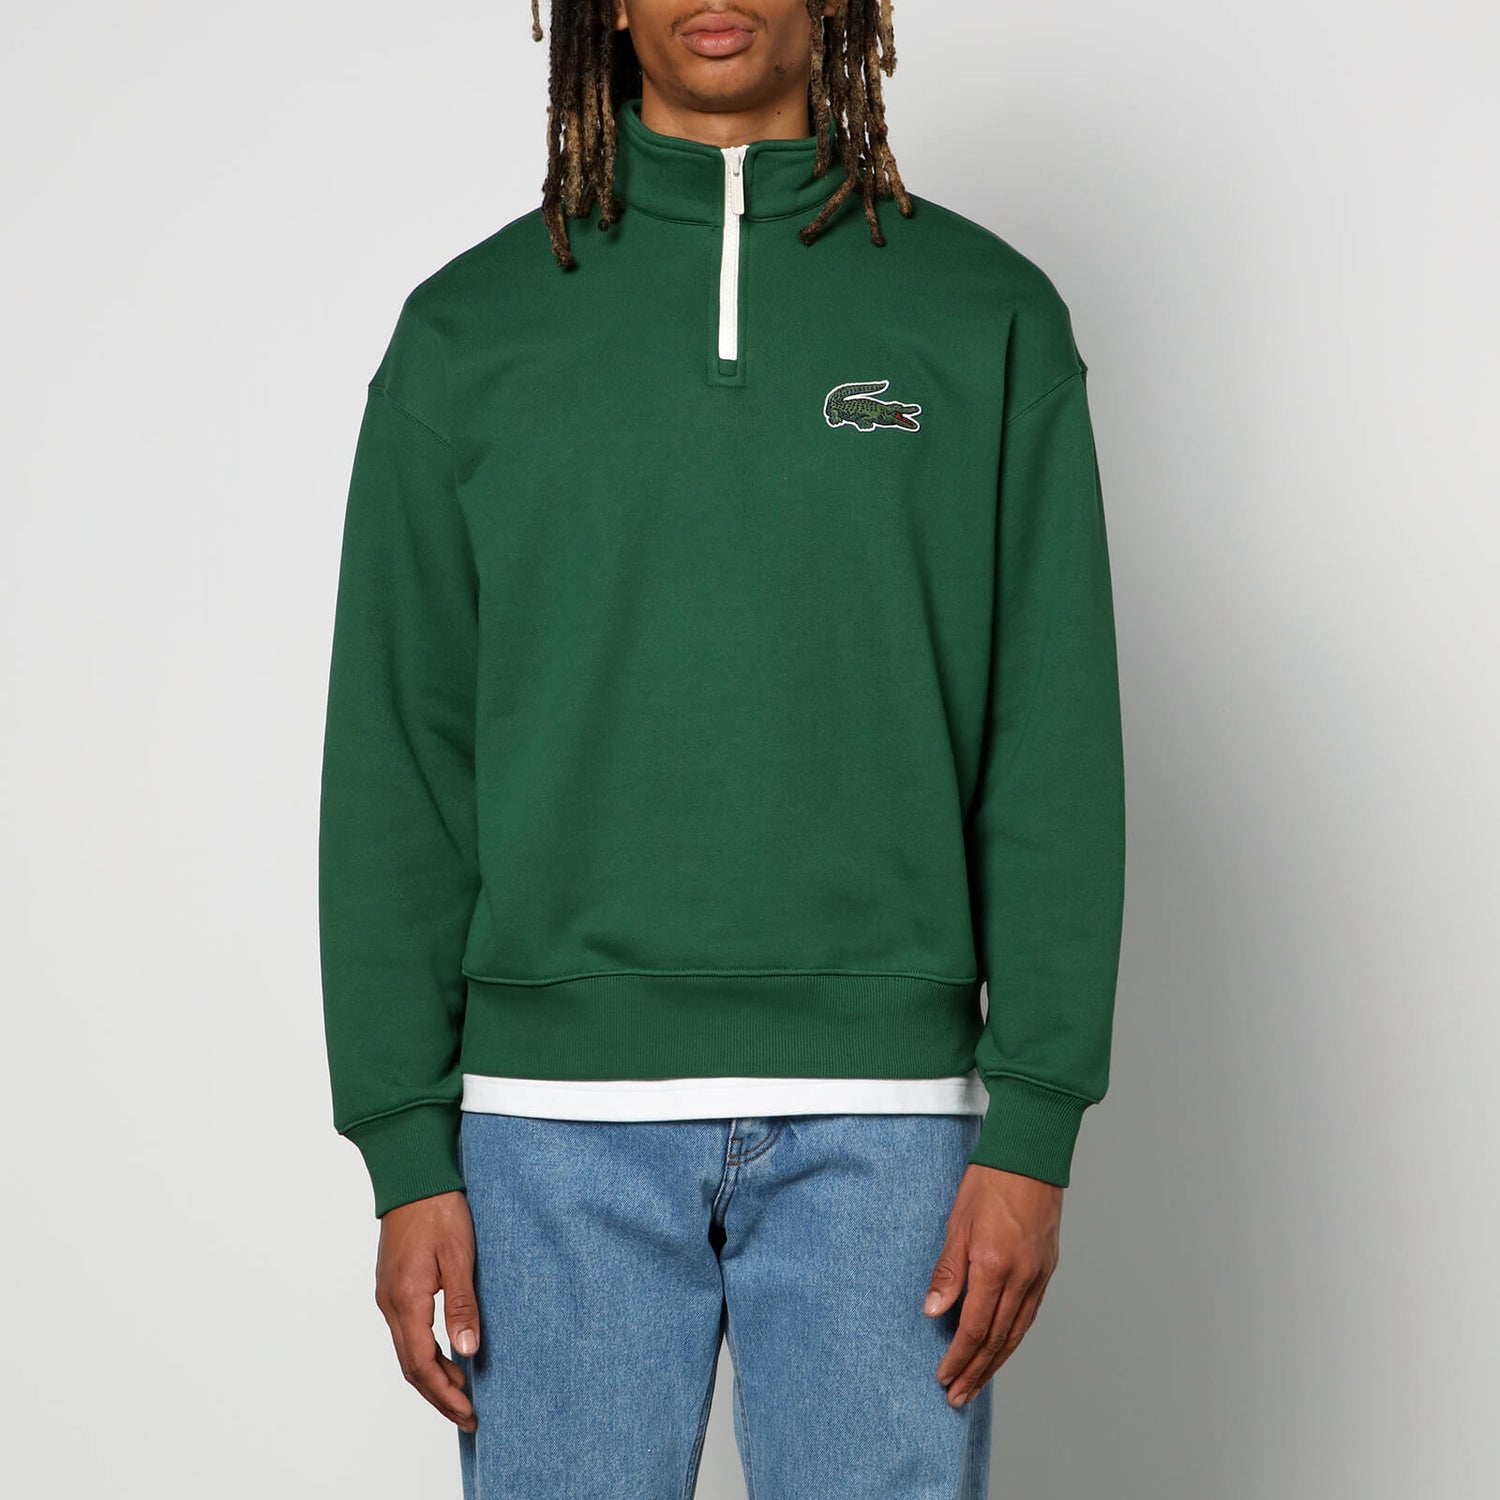 Lacoste Big Croc Cotton-Jersey Sweatshirt | TheHut.com